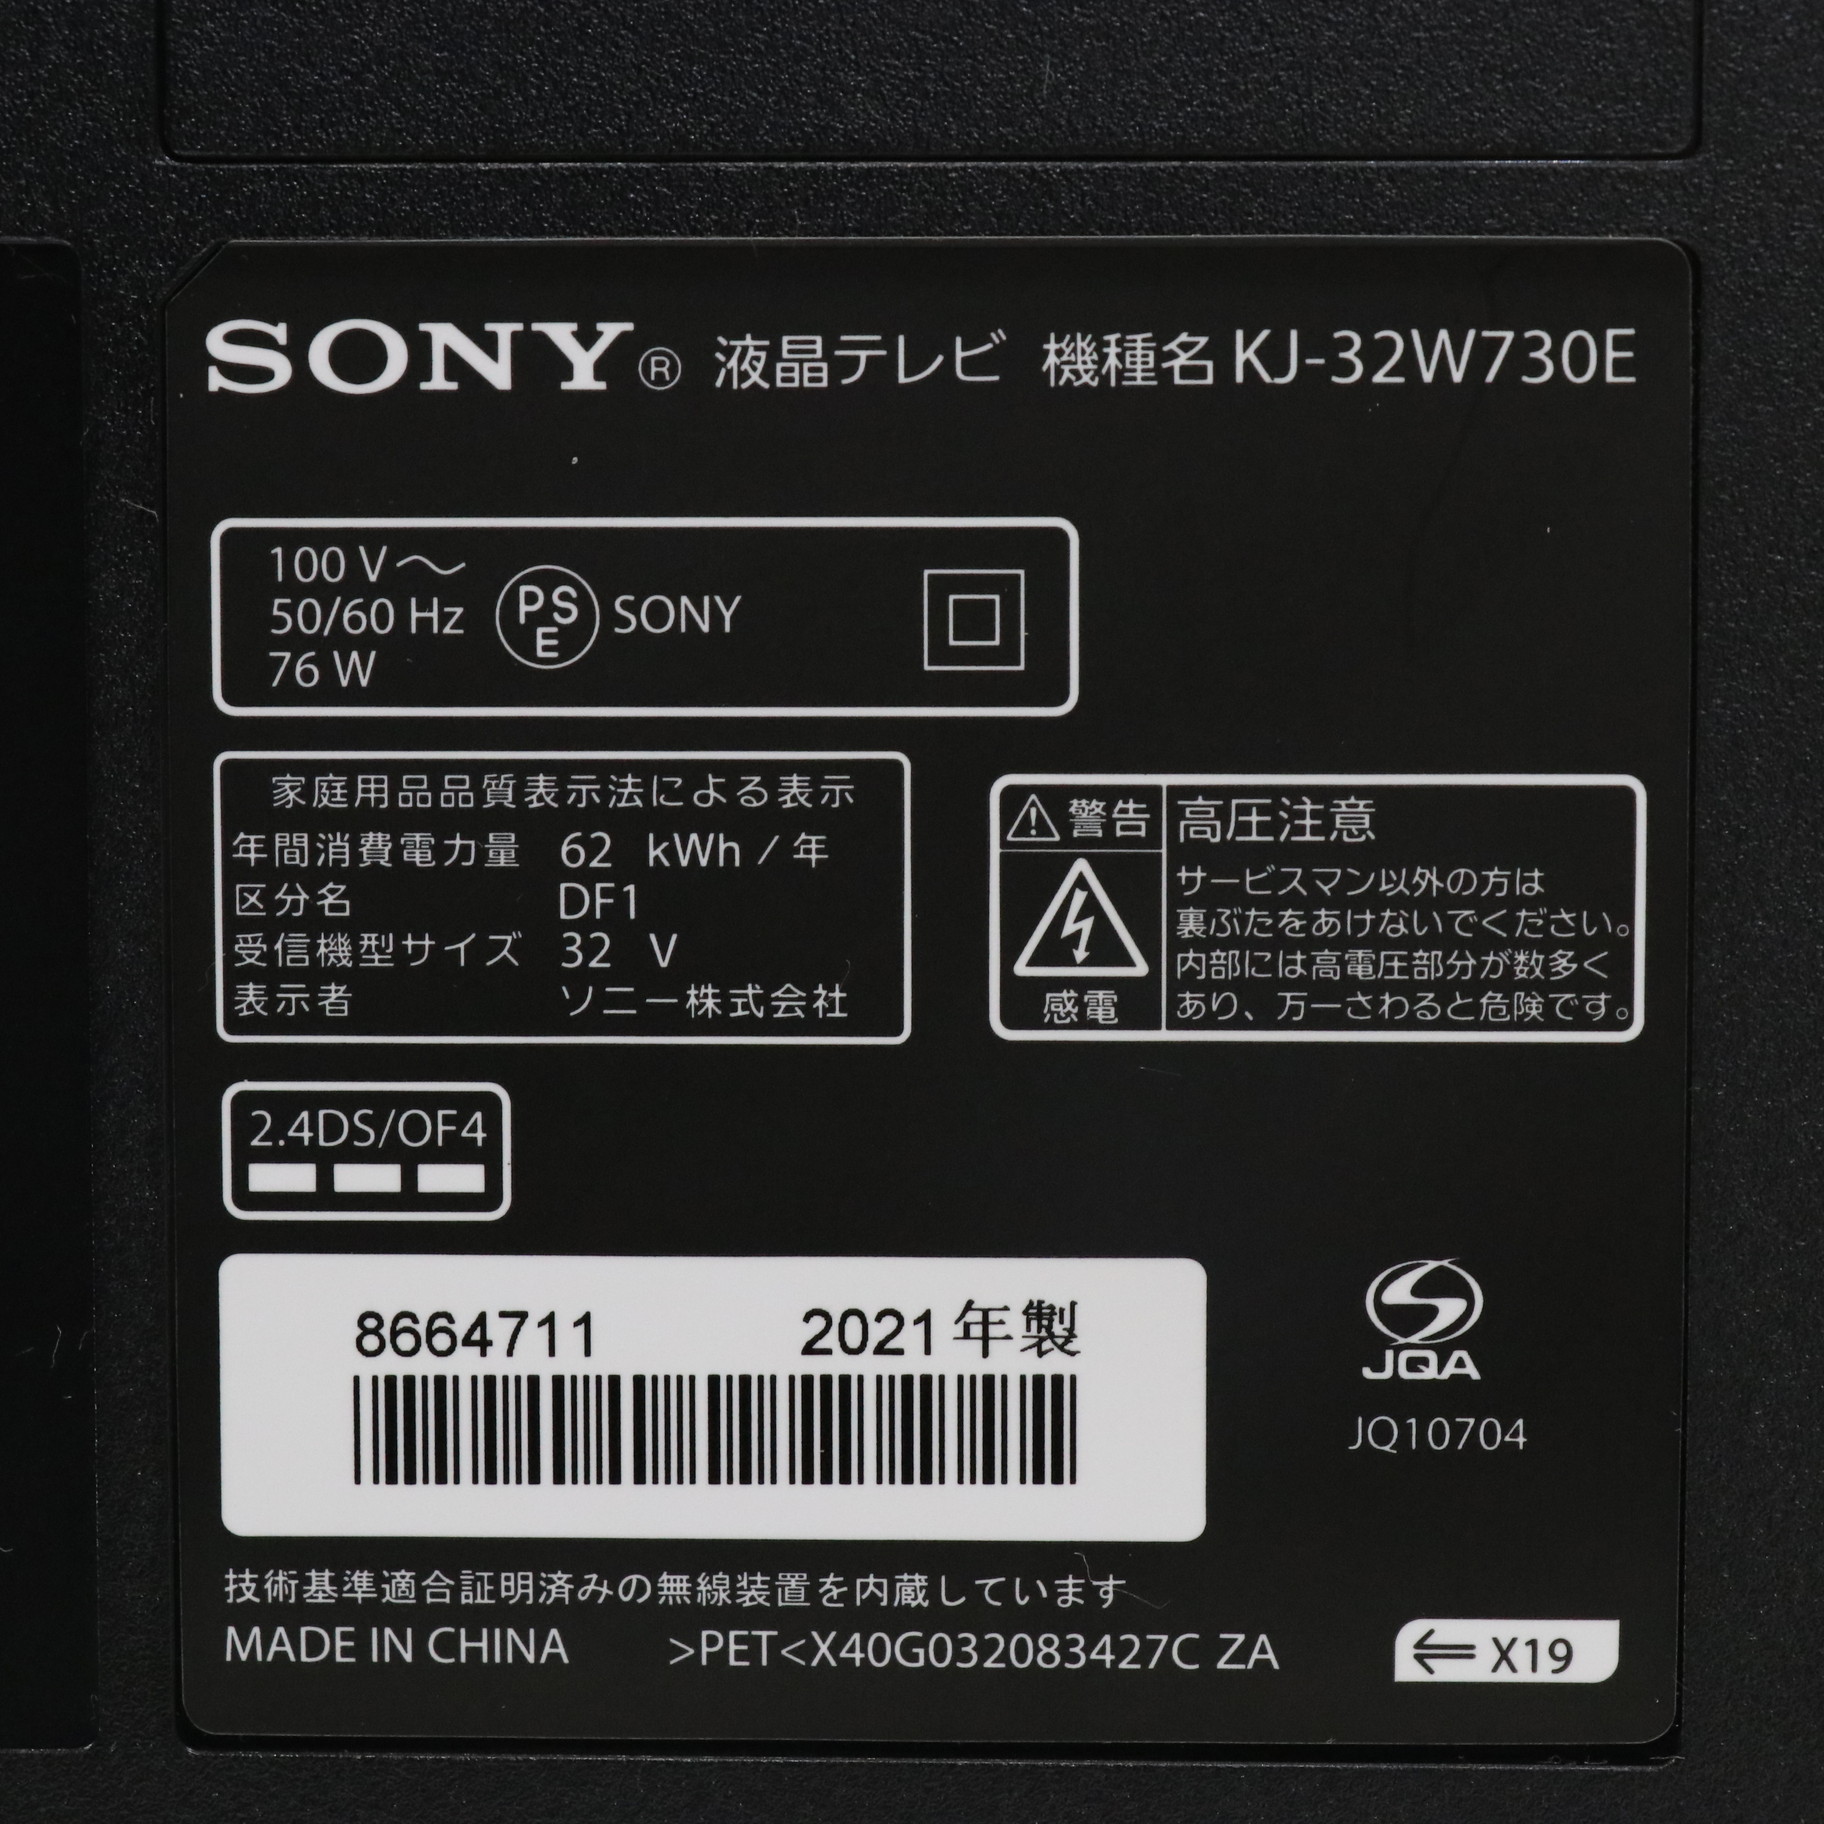 SONY 液晶テレビ 機種名 KJ-32W730E 2021年製宜しくお願い致し